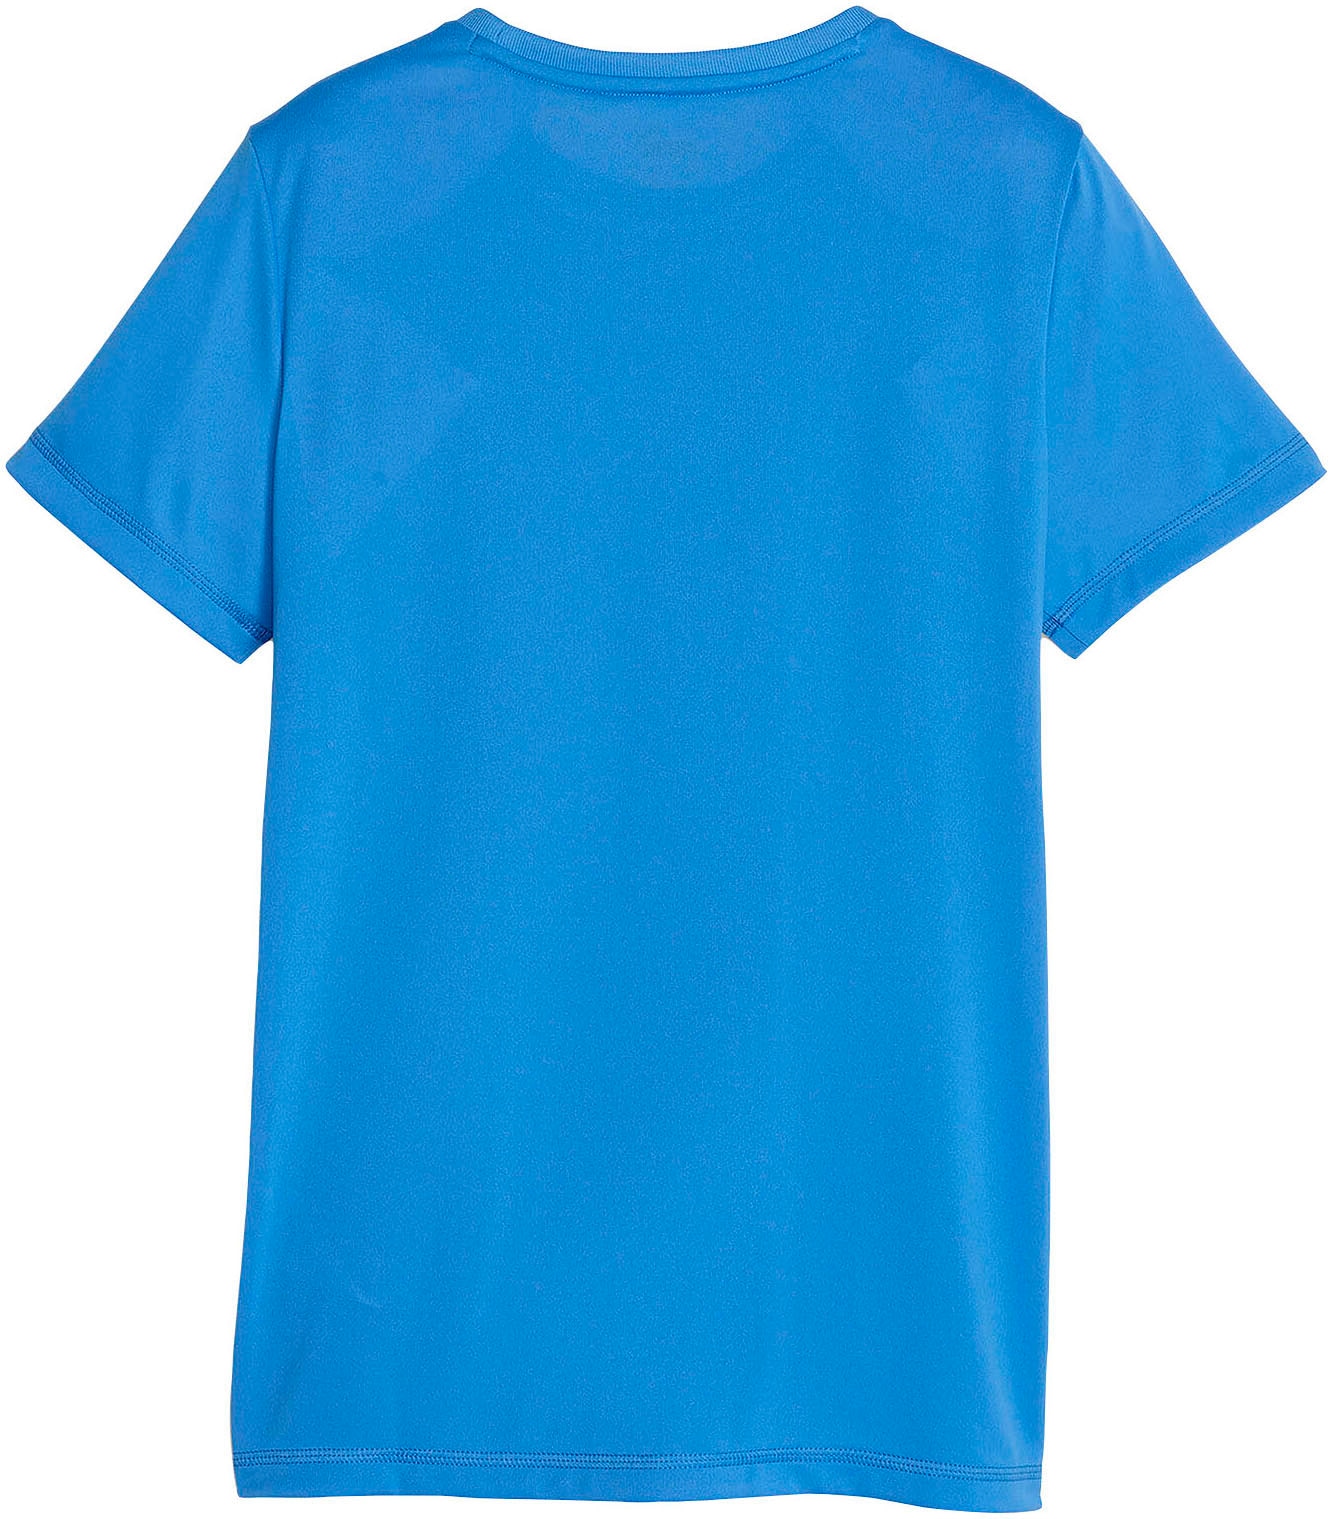 »ACTIVE SMALL LOGO T-Shirt TEE OTTO B« bei PUMA kaufen